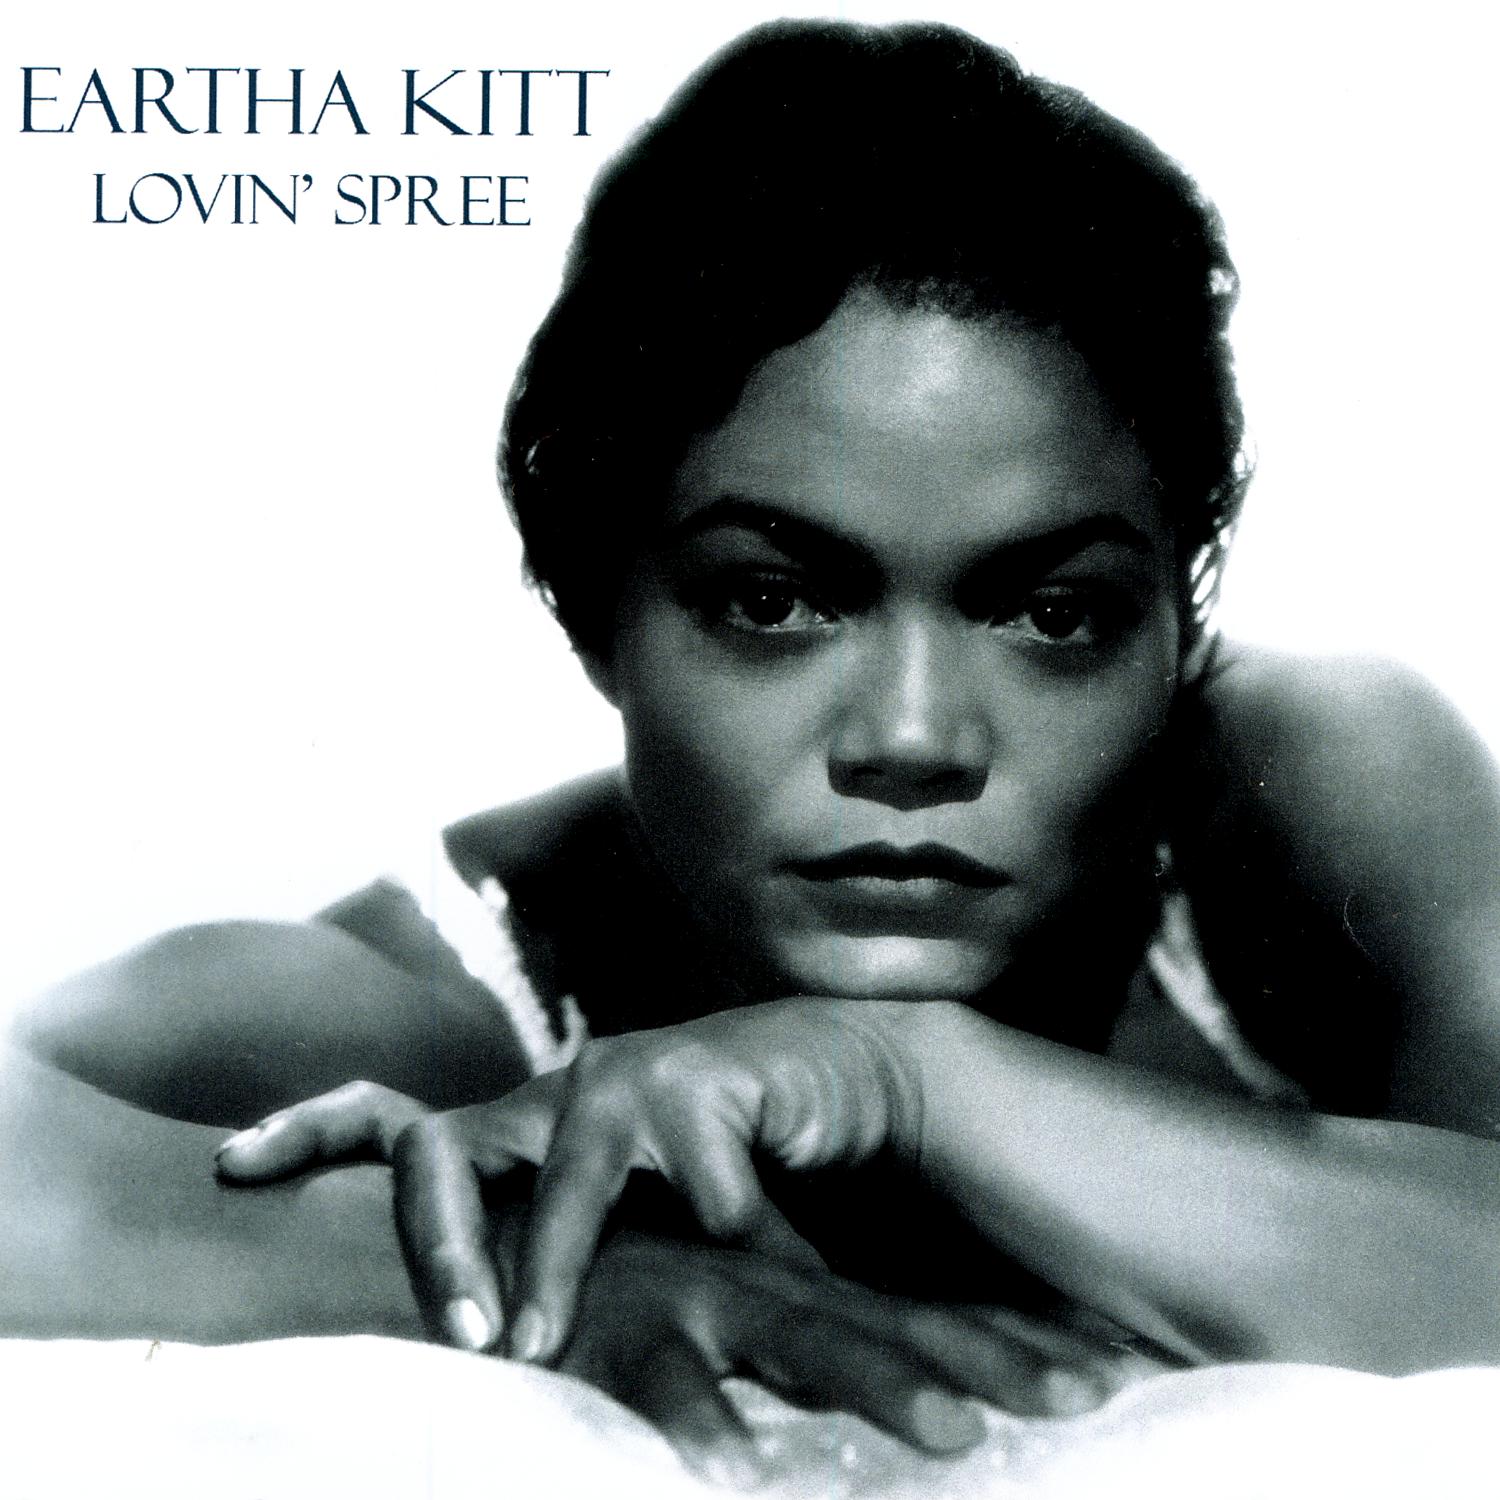 歌曲名《Lonely Girl》，由 Eartha Kitt 演唱，收录于《Lovin' Spree》专辑中.